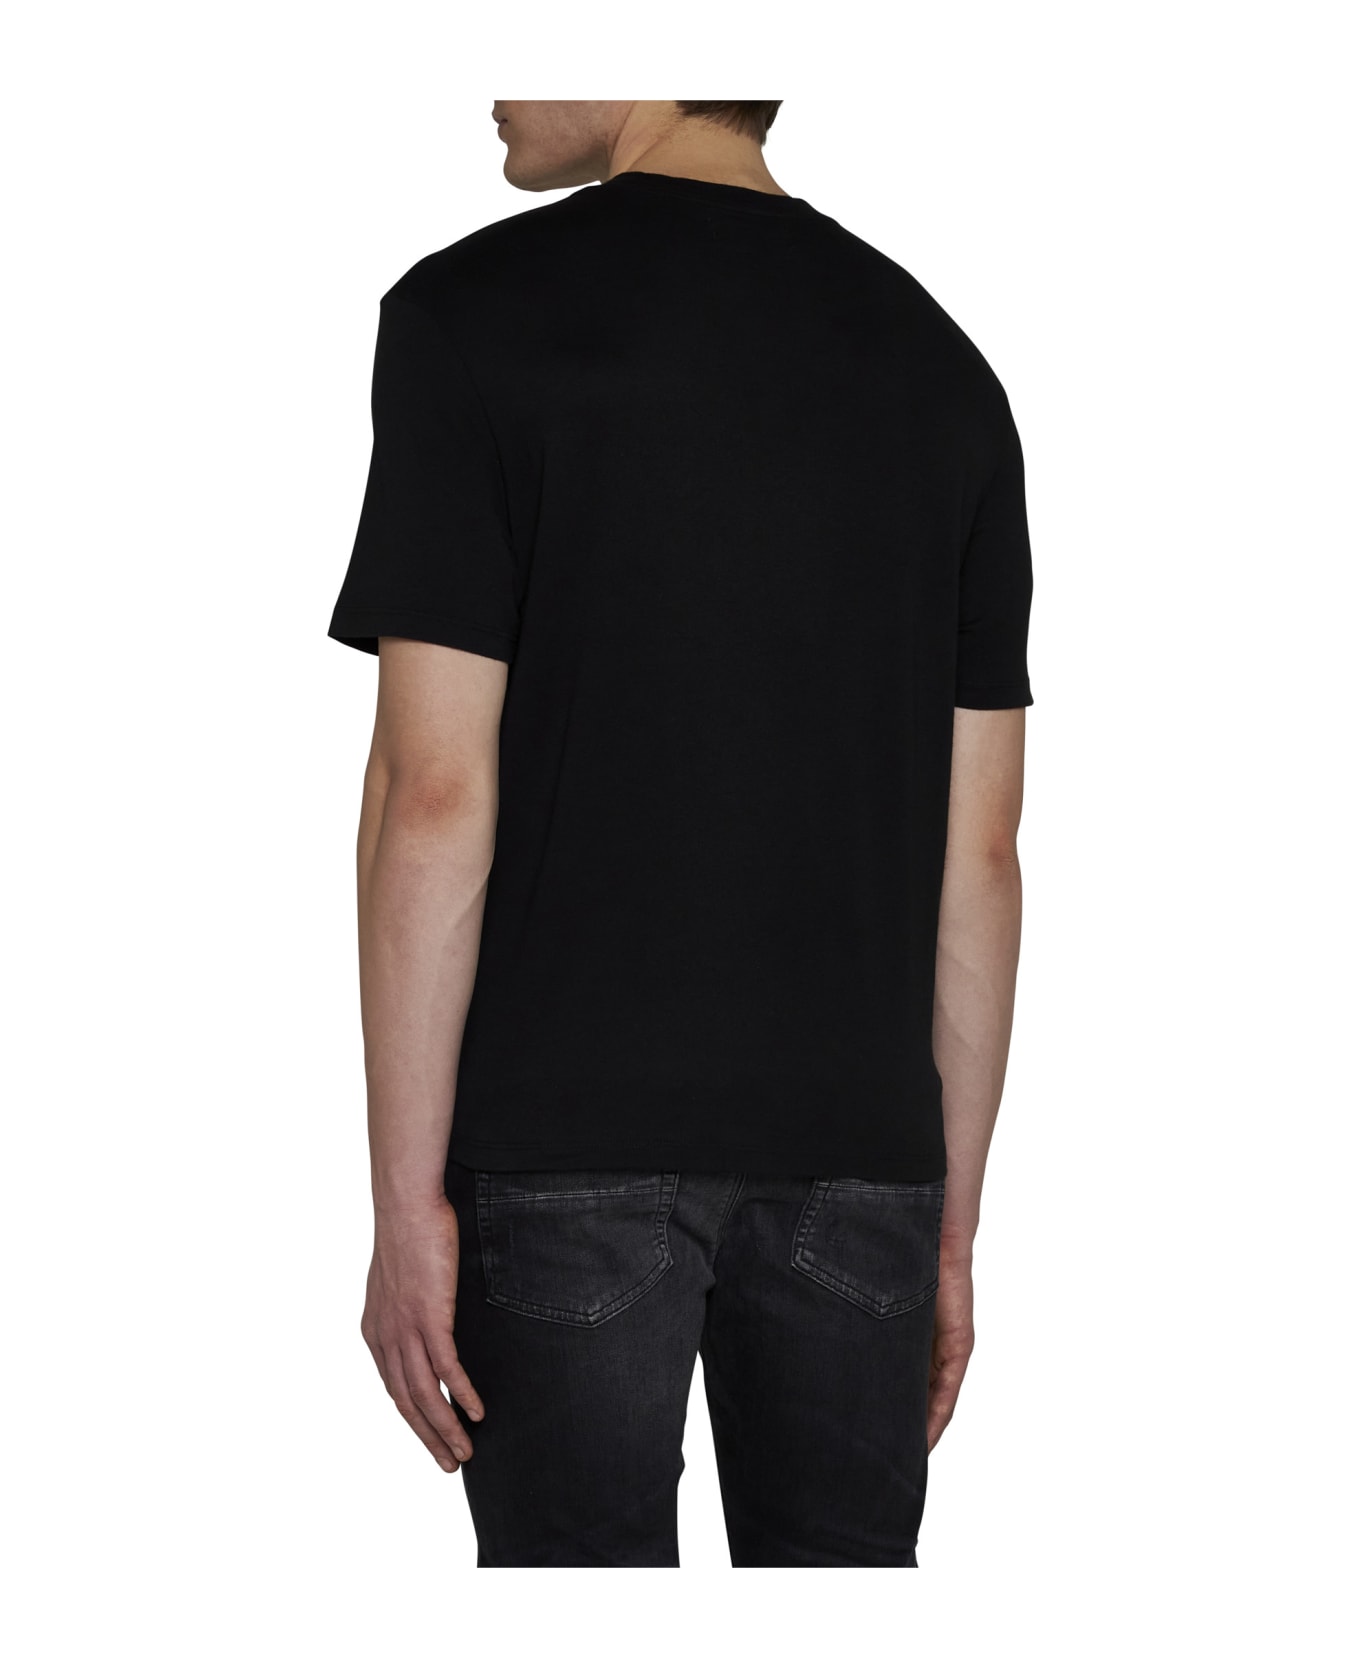 AMIRI T-Shirt - Black シャツ